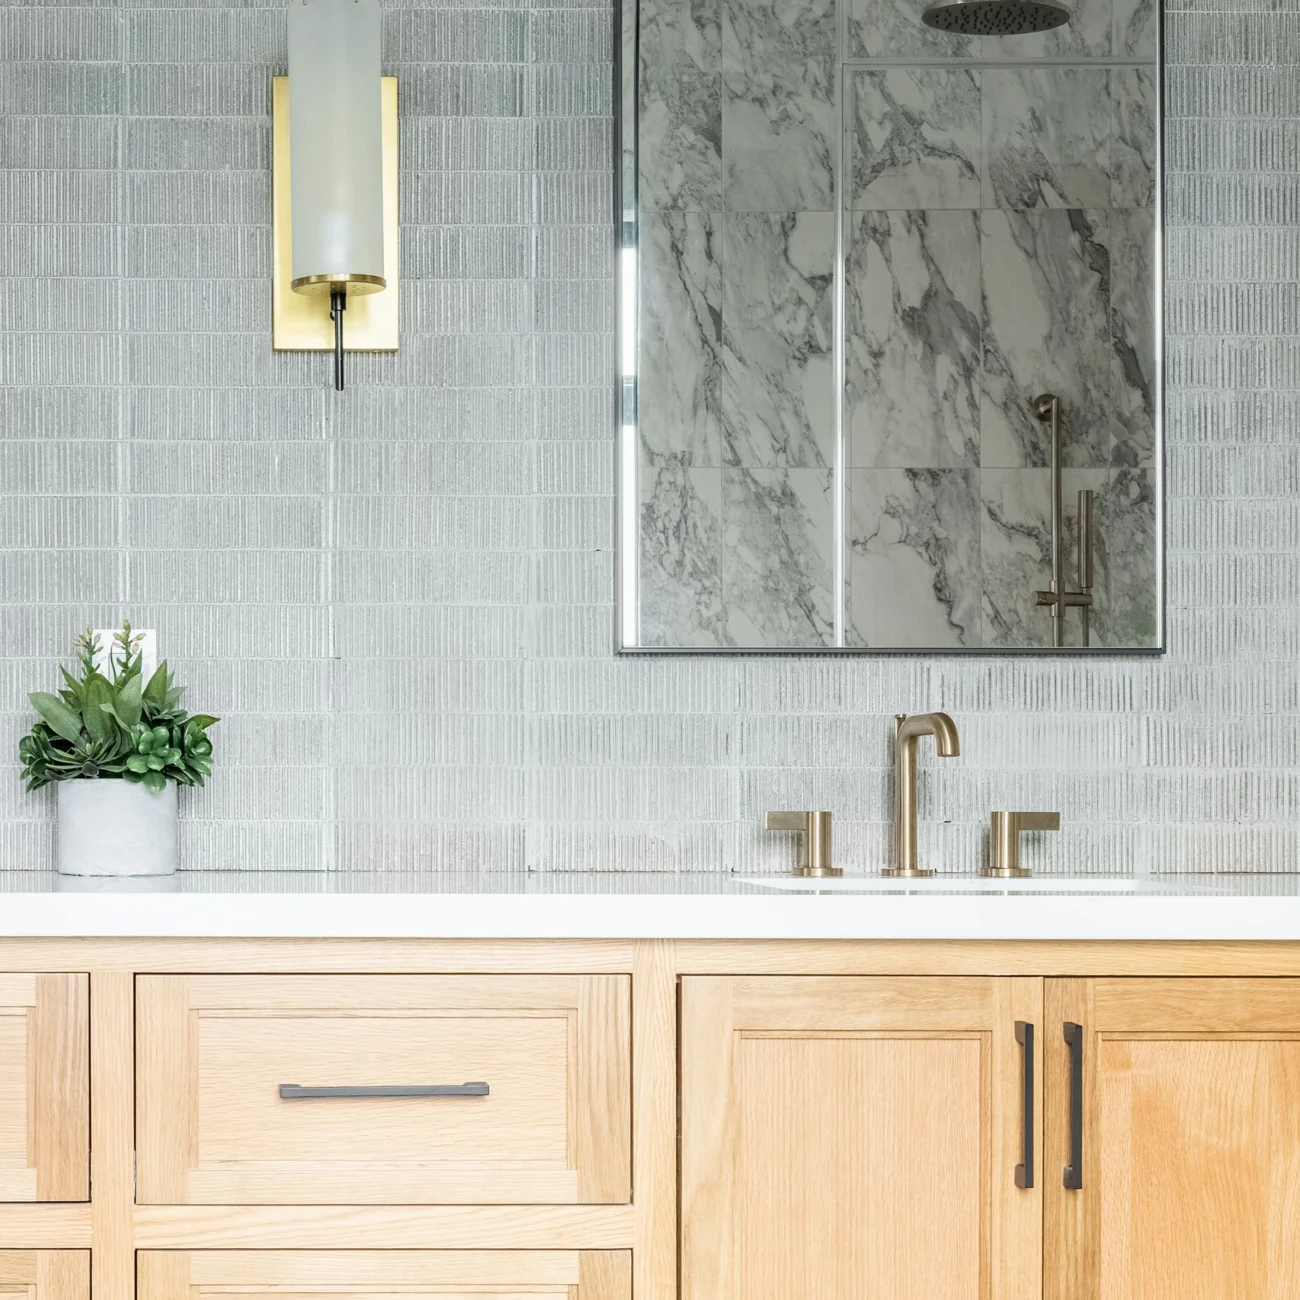 Christine Vroom Interiors | 36th | Costal bathroom with double vanity